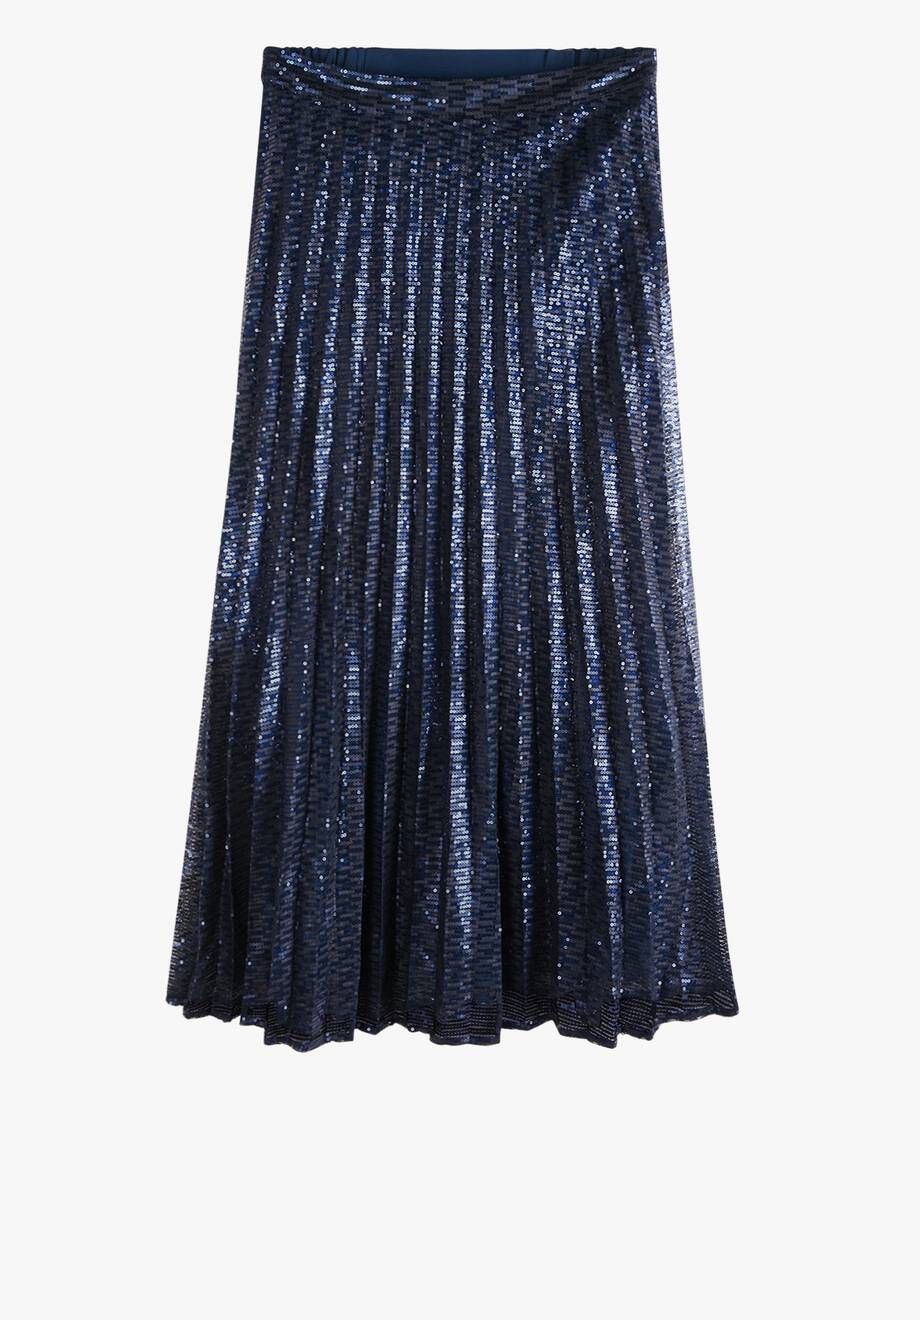 Clio Pleated Sequin Skirt, £129